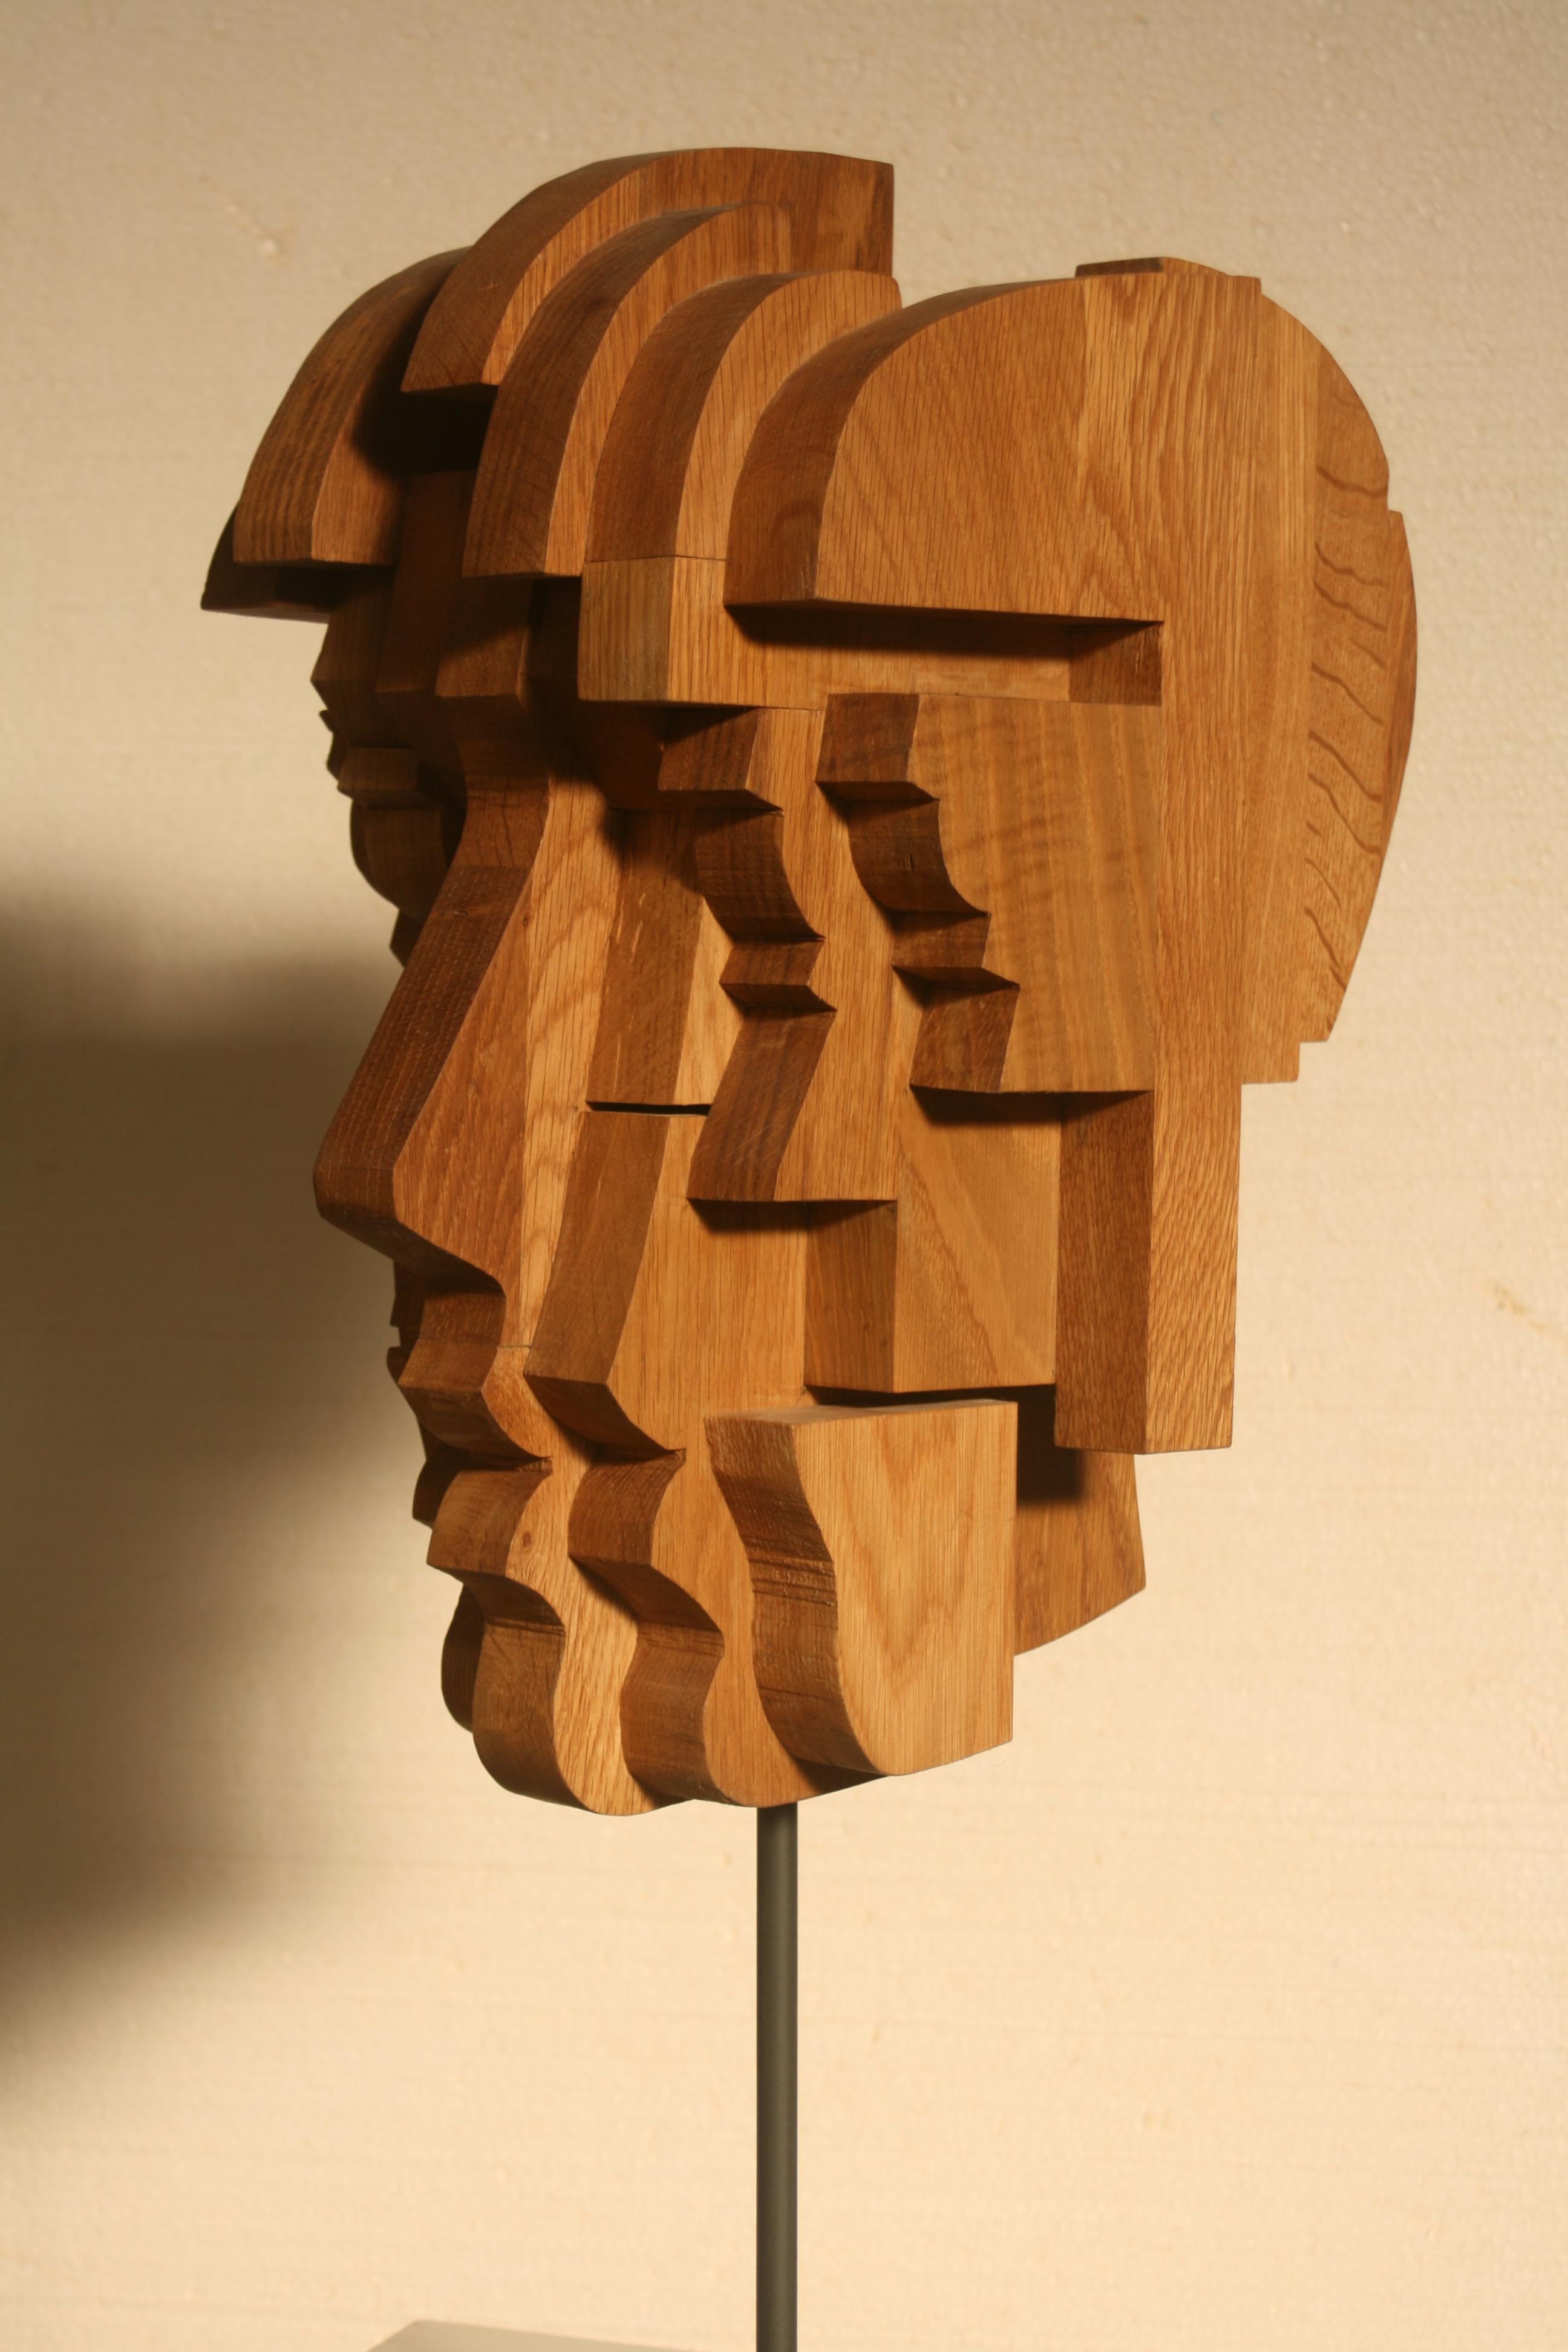 Cabeça de menino, Nogueira Lopes, 2020, Contemporary sculpture, Oak wood, Brown  - Sculpture by Agostinho Nogueira Lopes